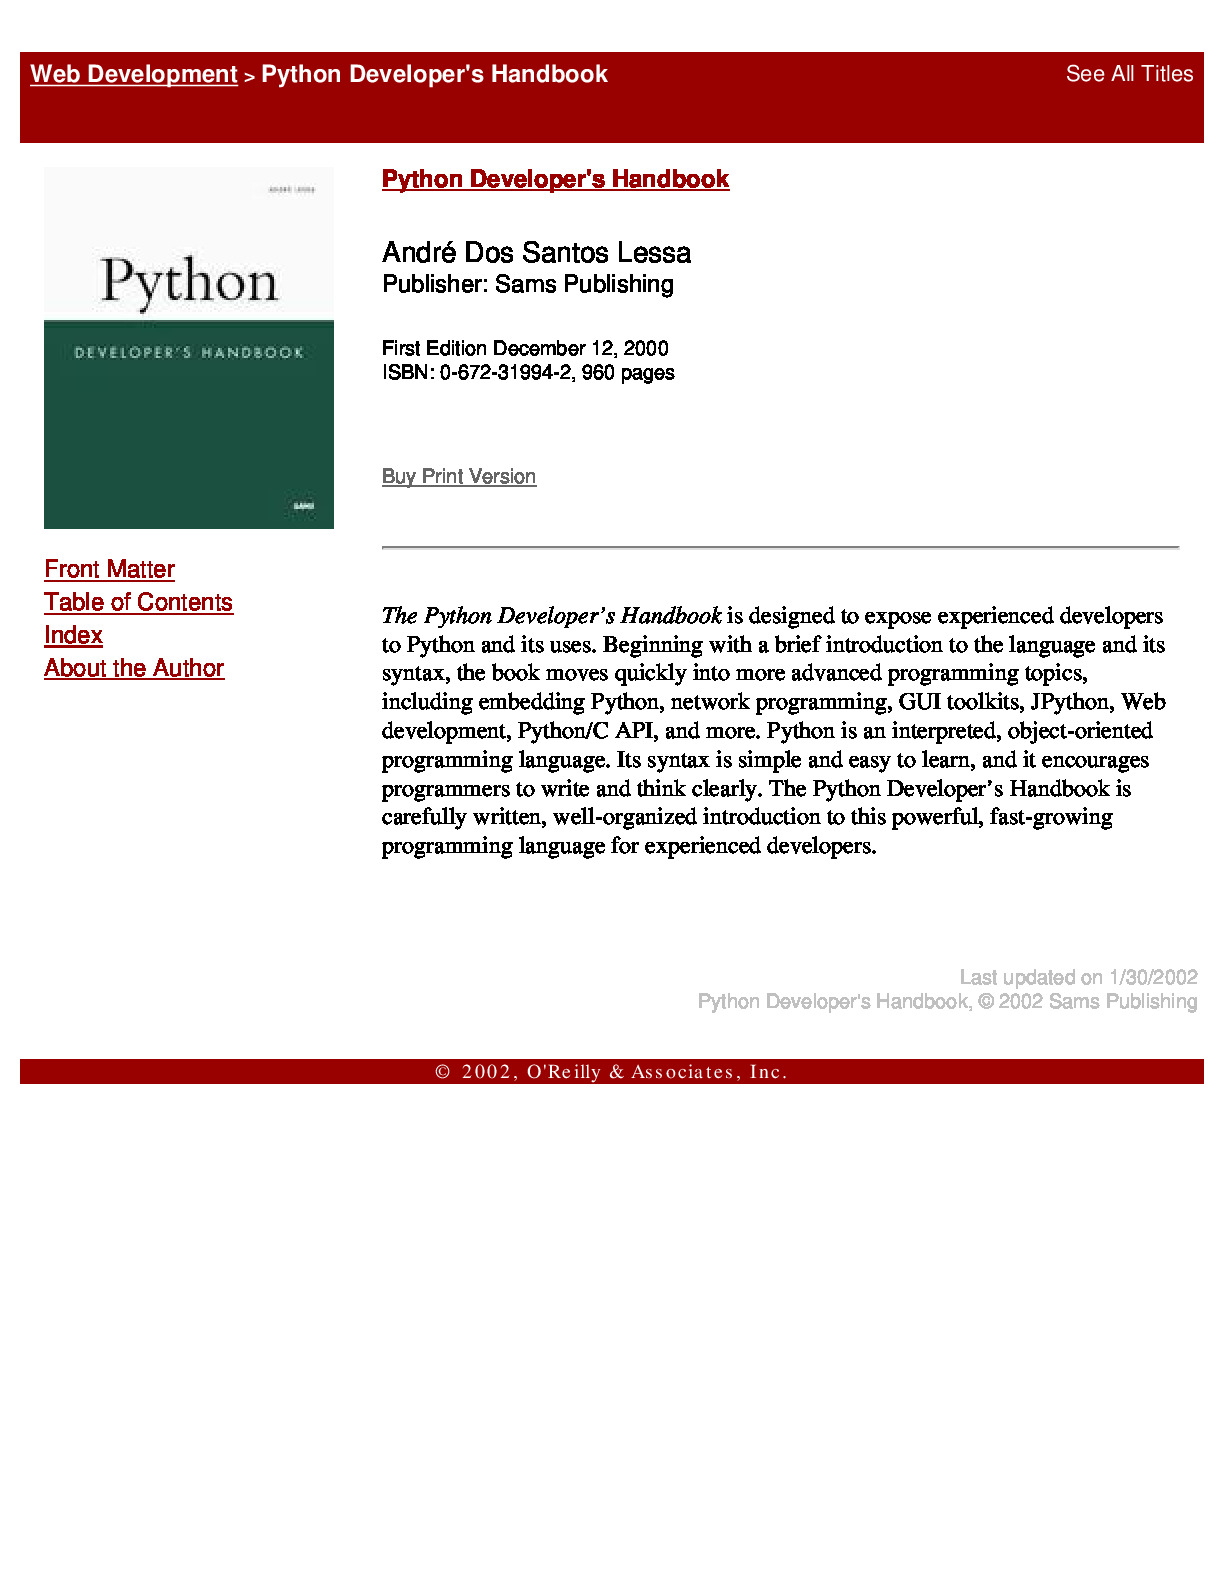 Andre Lessa-Python developer’s handbook-Sams (2001)